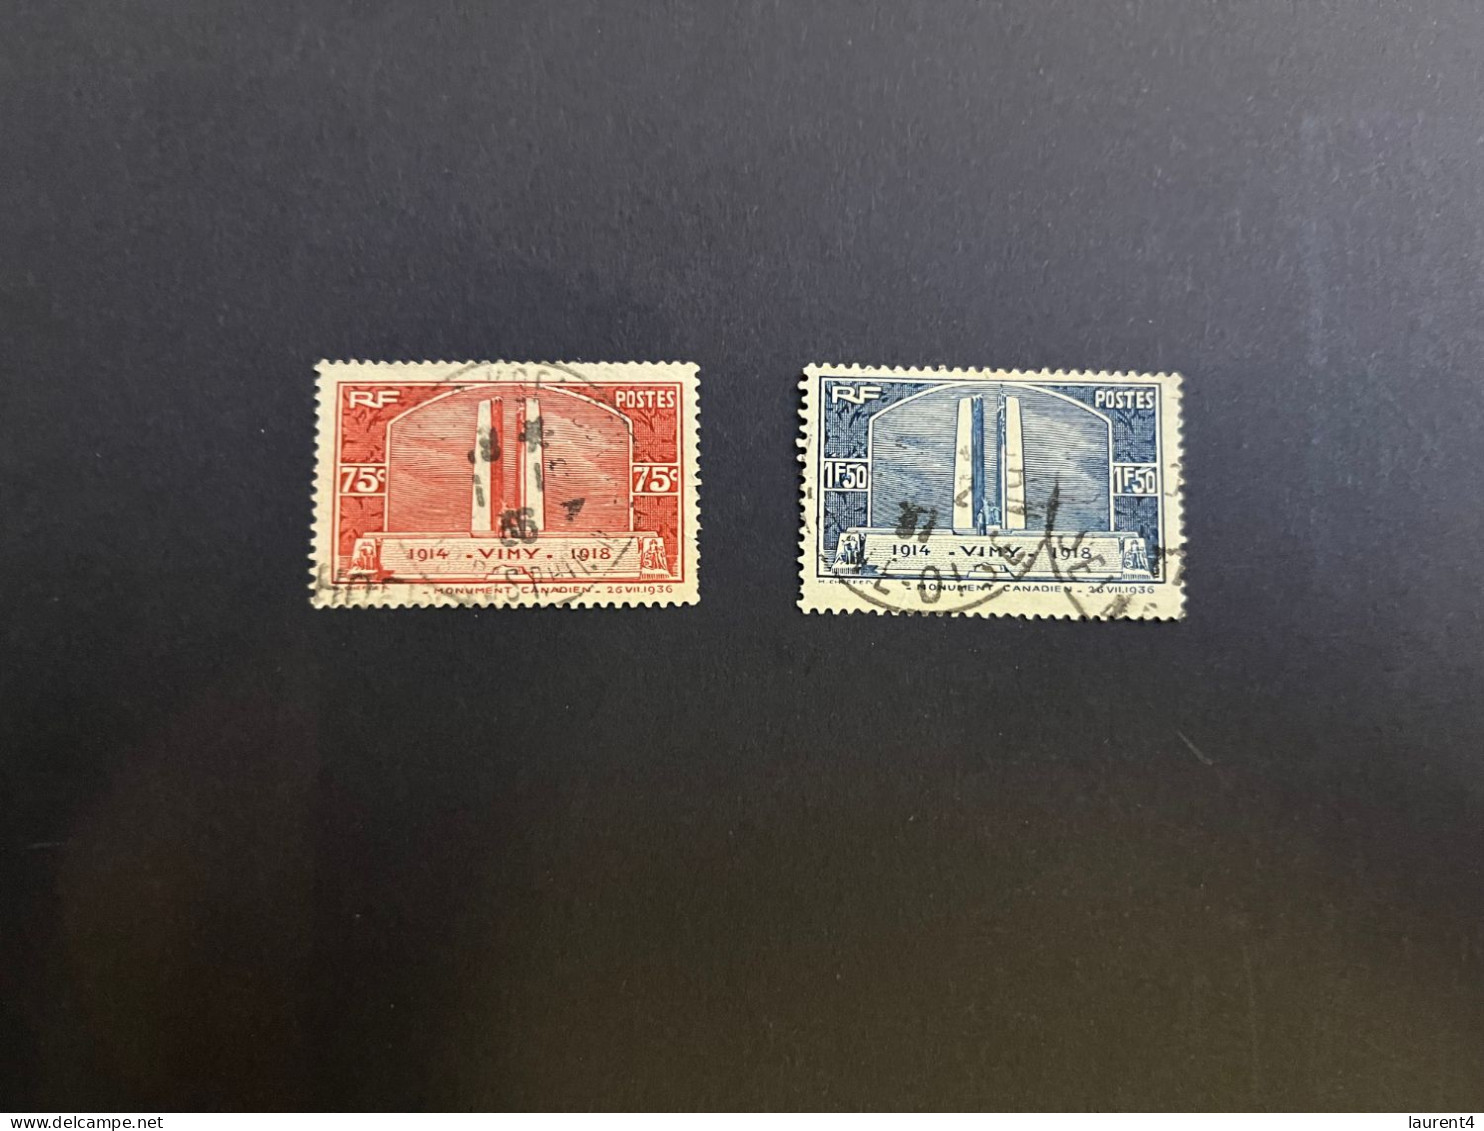 20-4-2024 (stamp) 2 Used Stamp - FRANCE - Vimy Memorial - Gebraucht